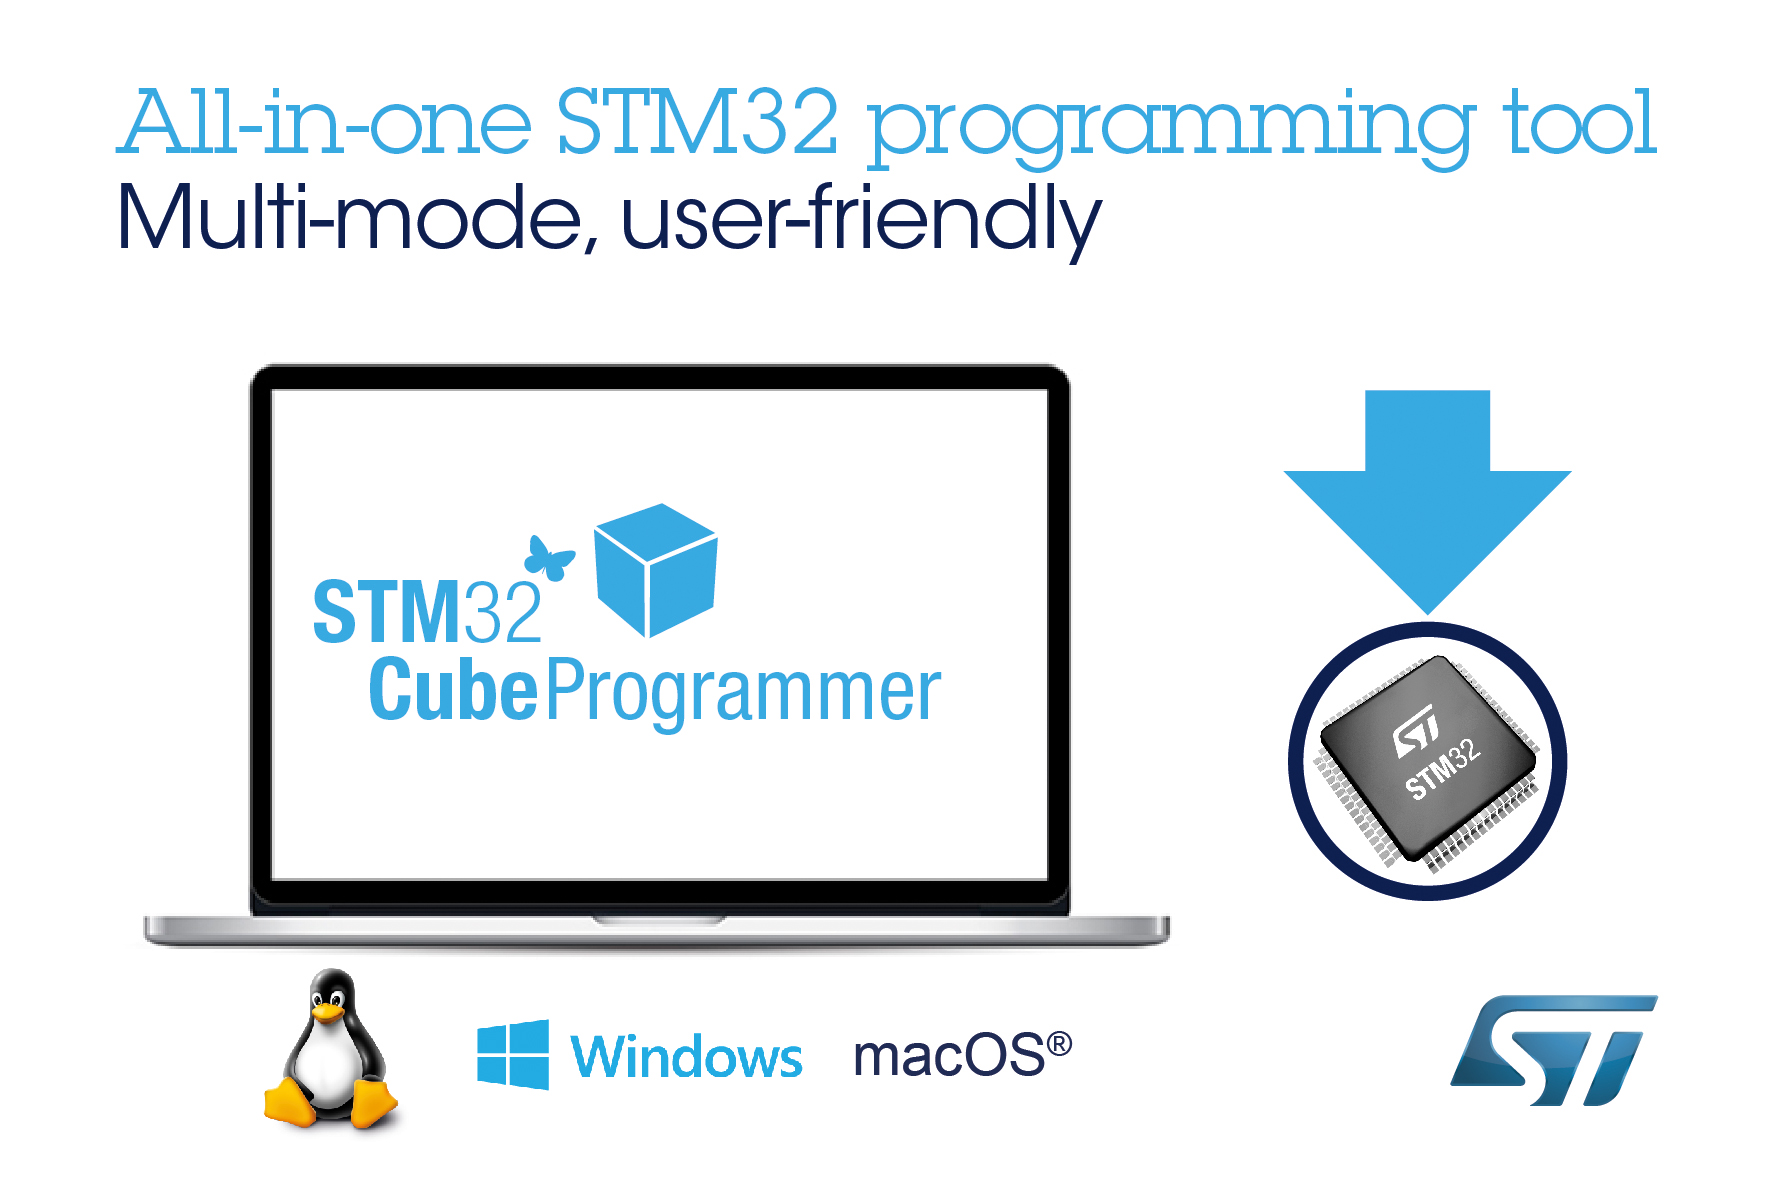 Stm32 cube programmer. Stm32cubeprogrammer. Stm32 Programmer. Stm32 программа.